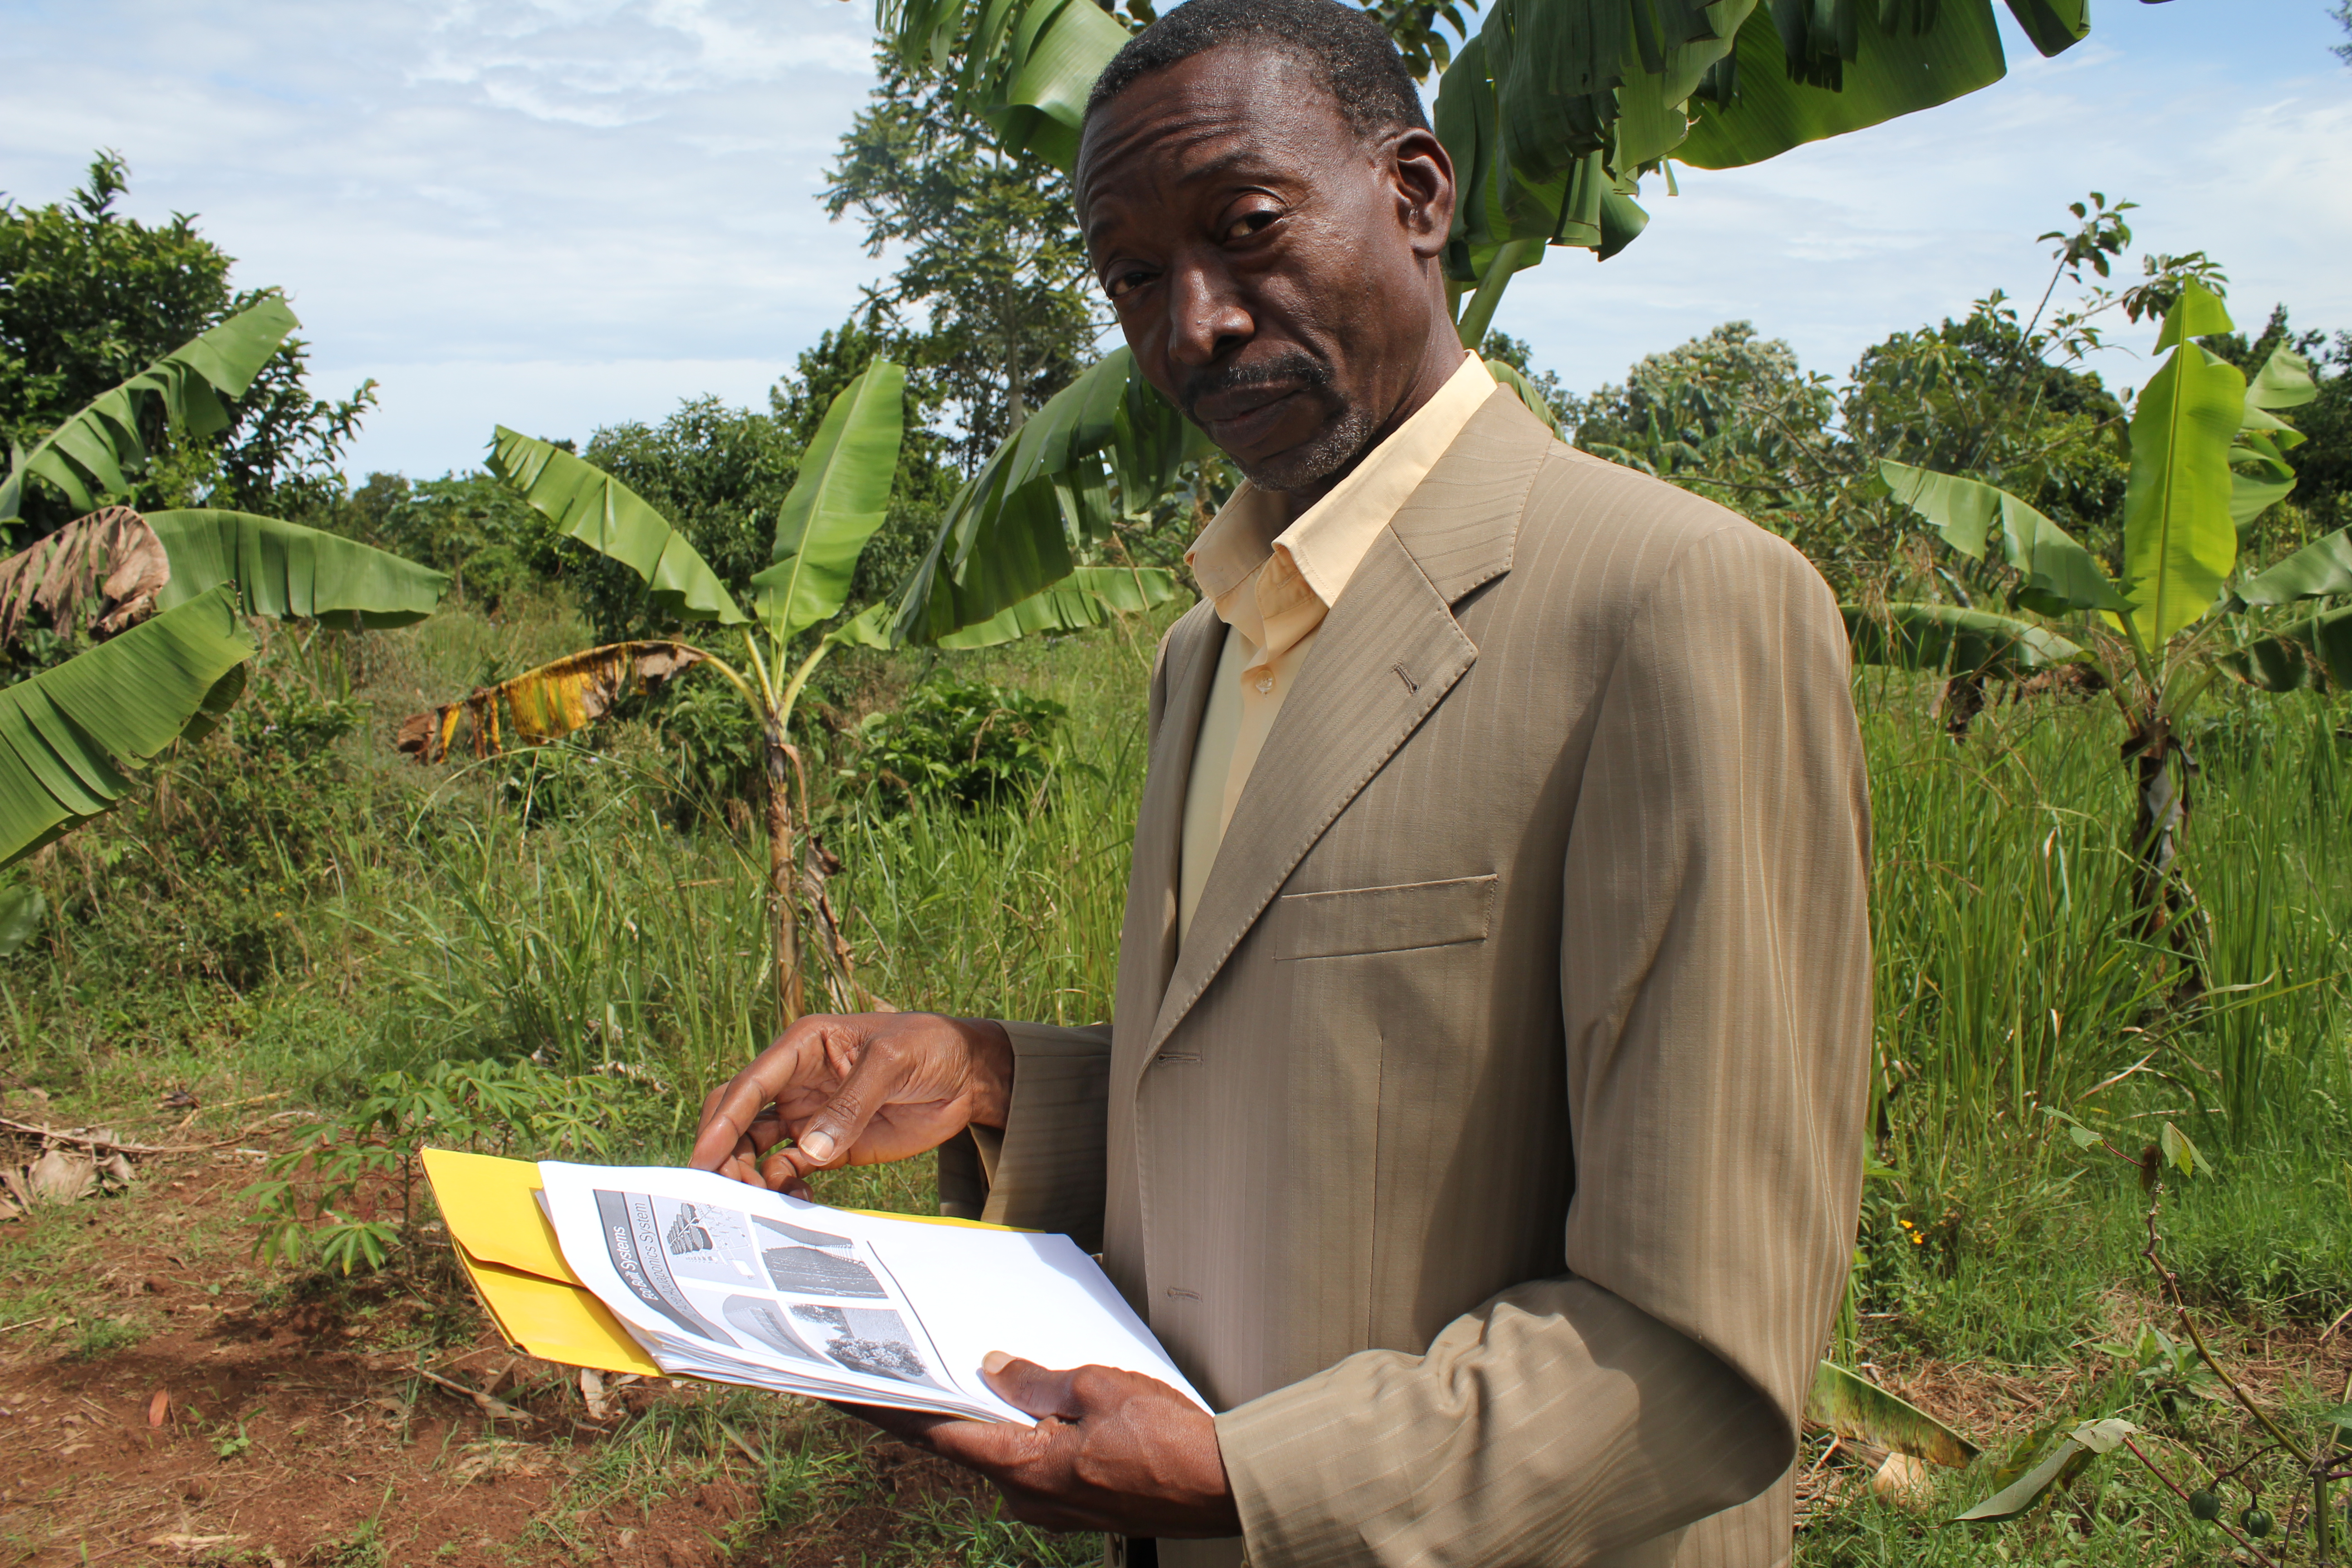 Charles Mulamata surveys a plot of land where he hopes to build an aquaponics facility.